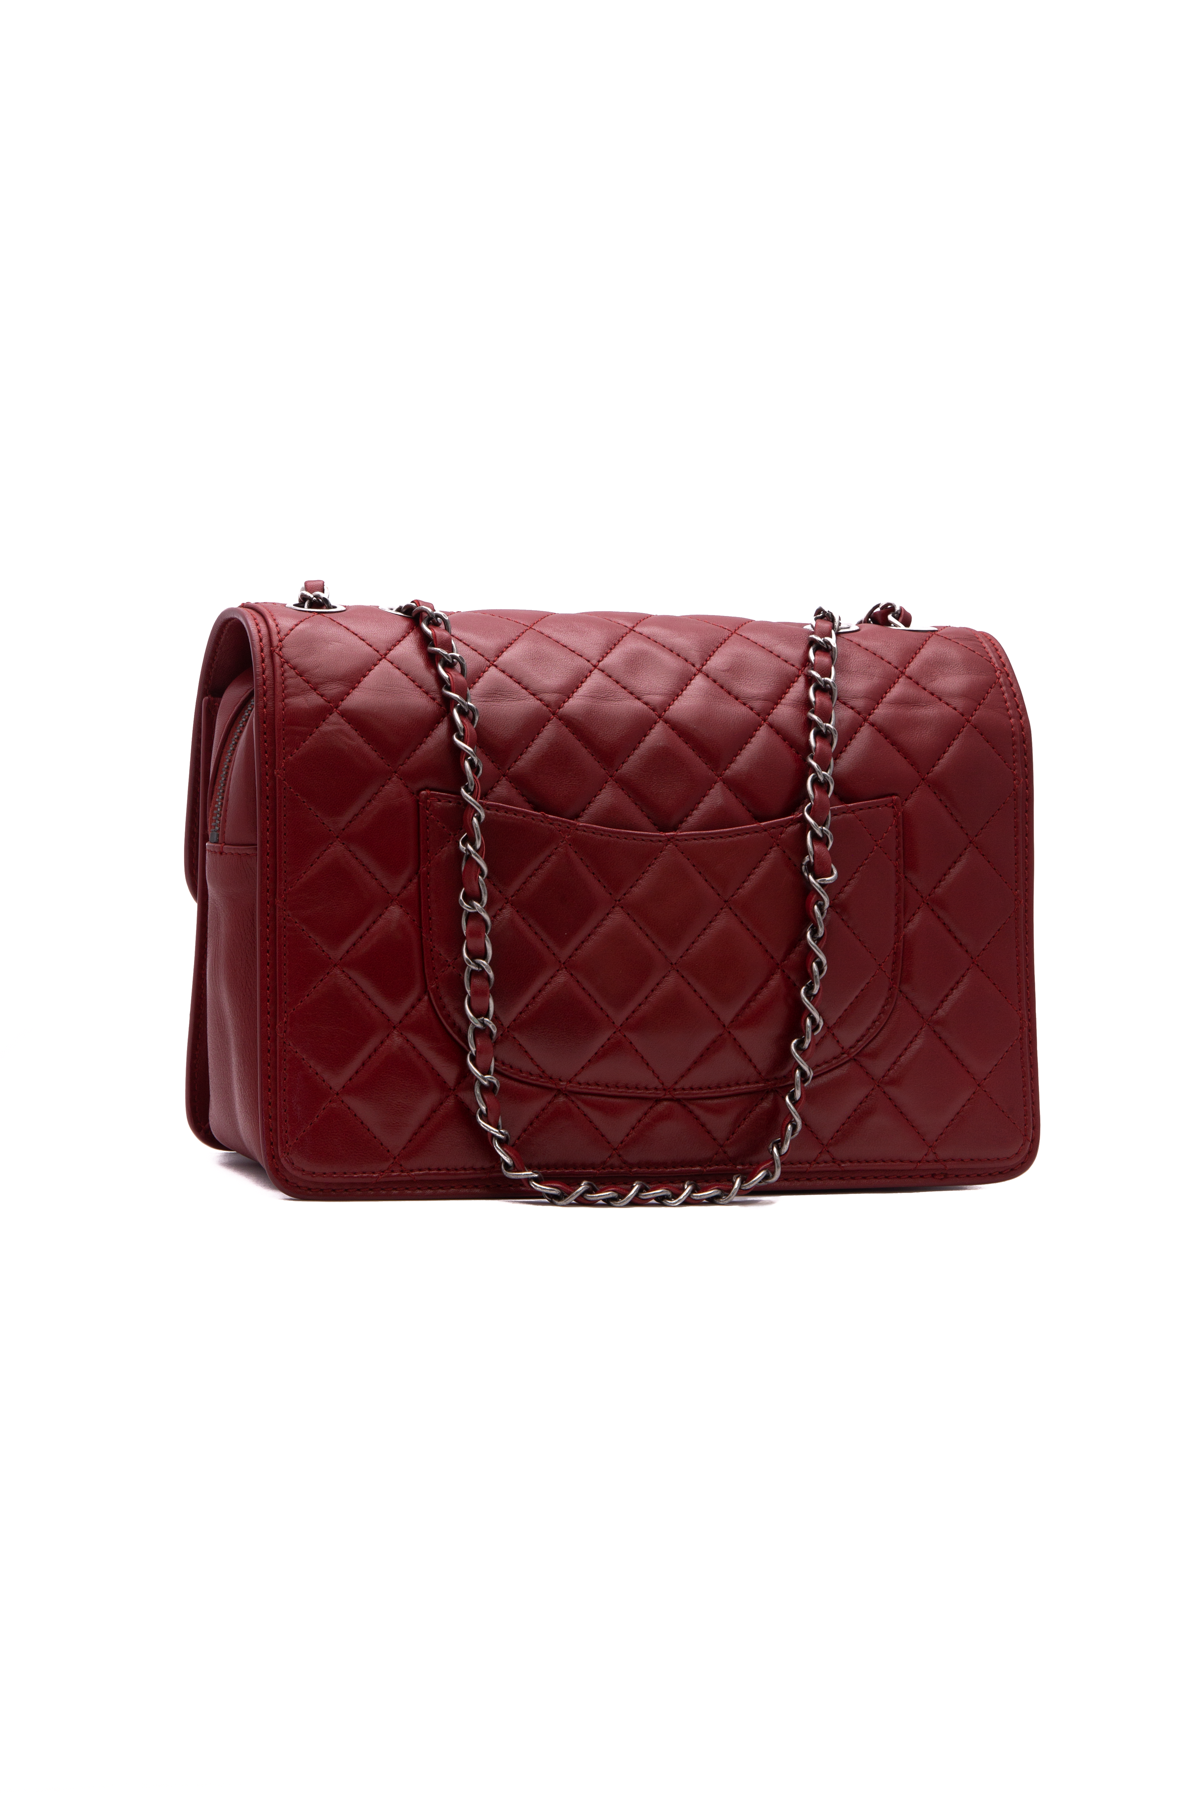 Zara Brazil Leather Shoulder Bag Purse Brown Flap Studded Made in Spain 12  x 12